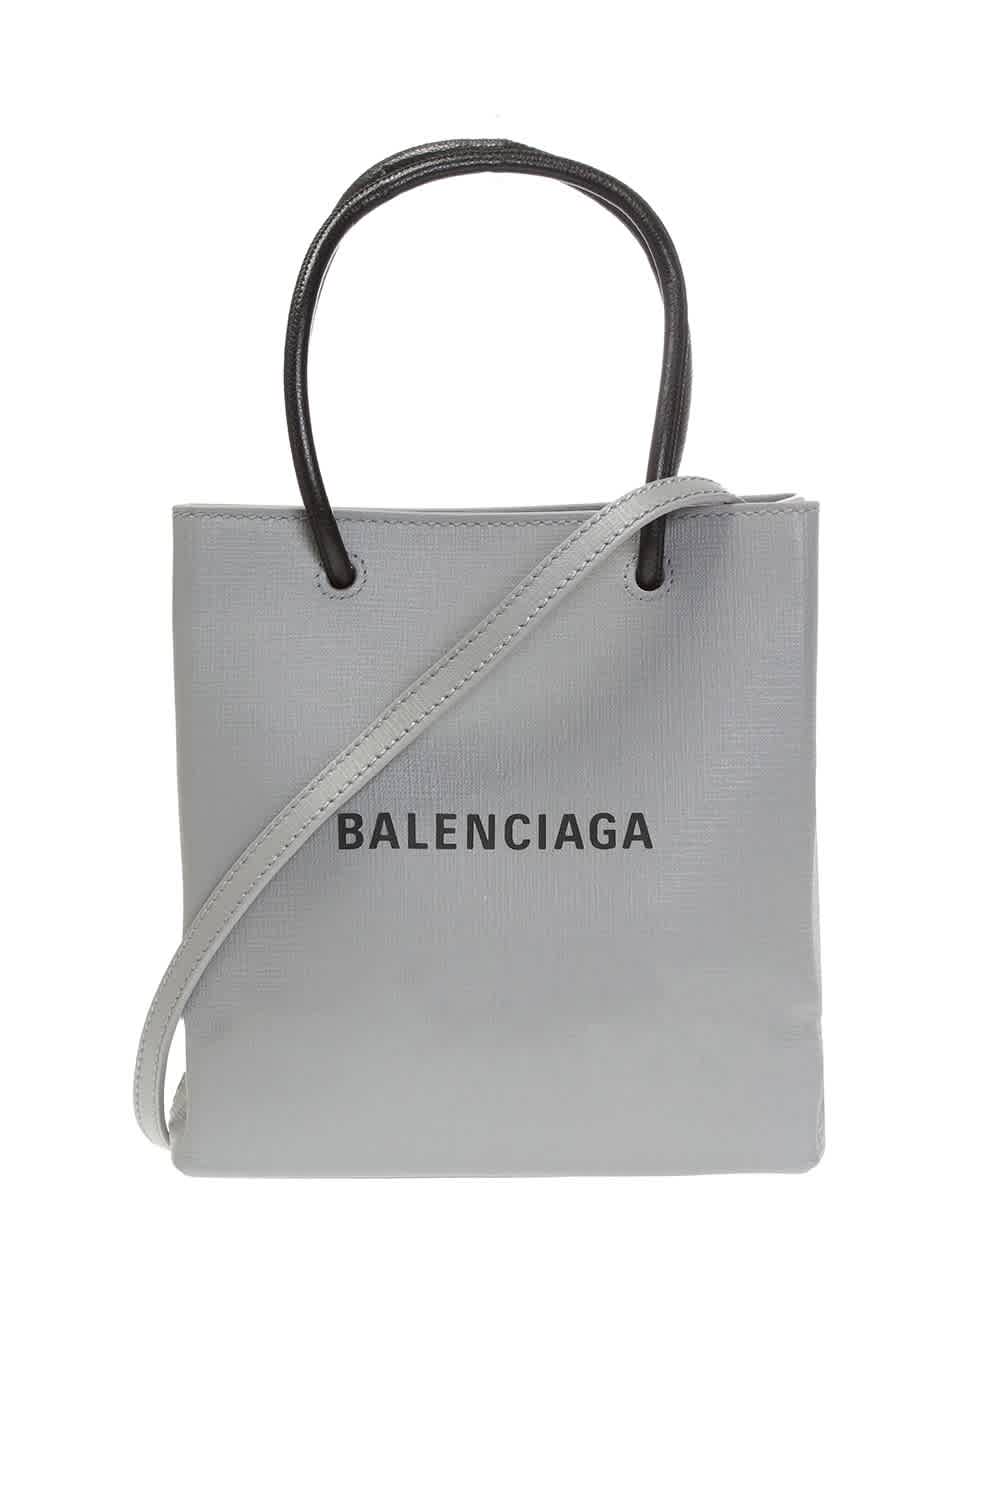 Balenciaga Logo Shoulder Bag In Black,grey